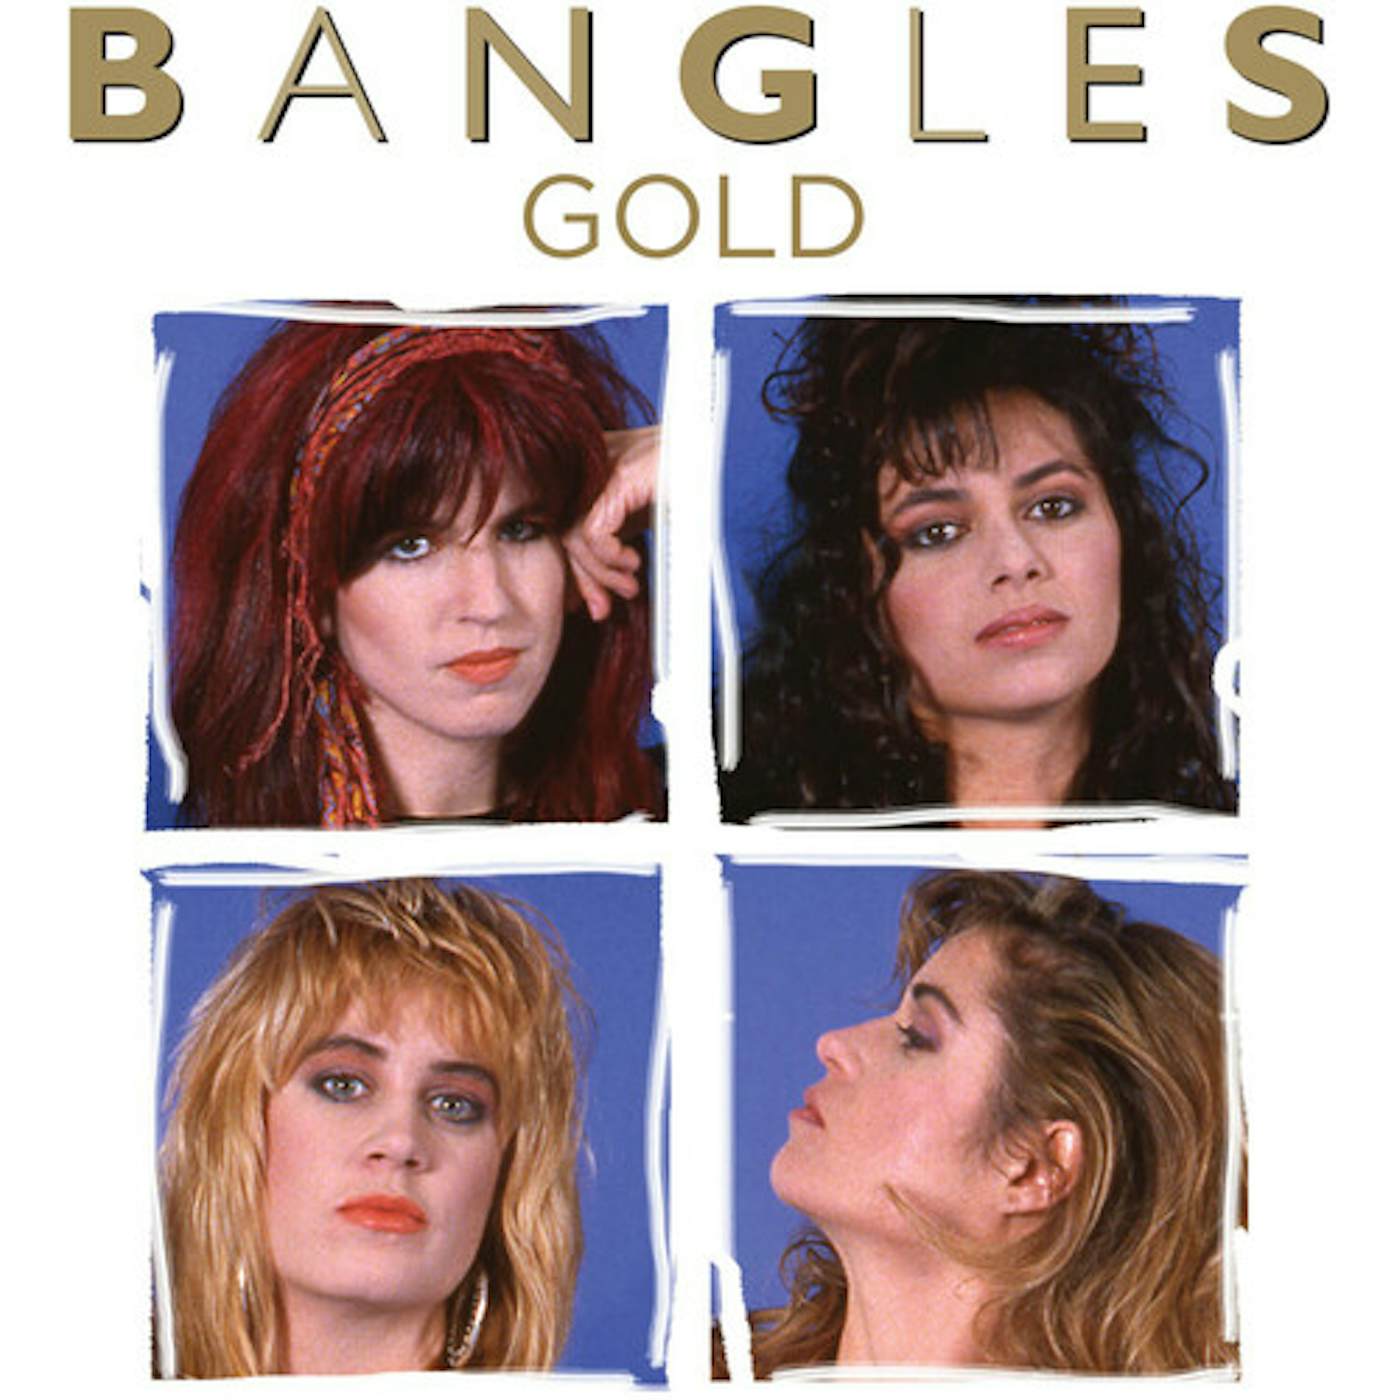 The Bangles GOLD CD